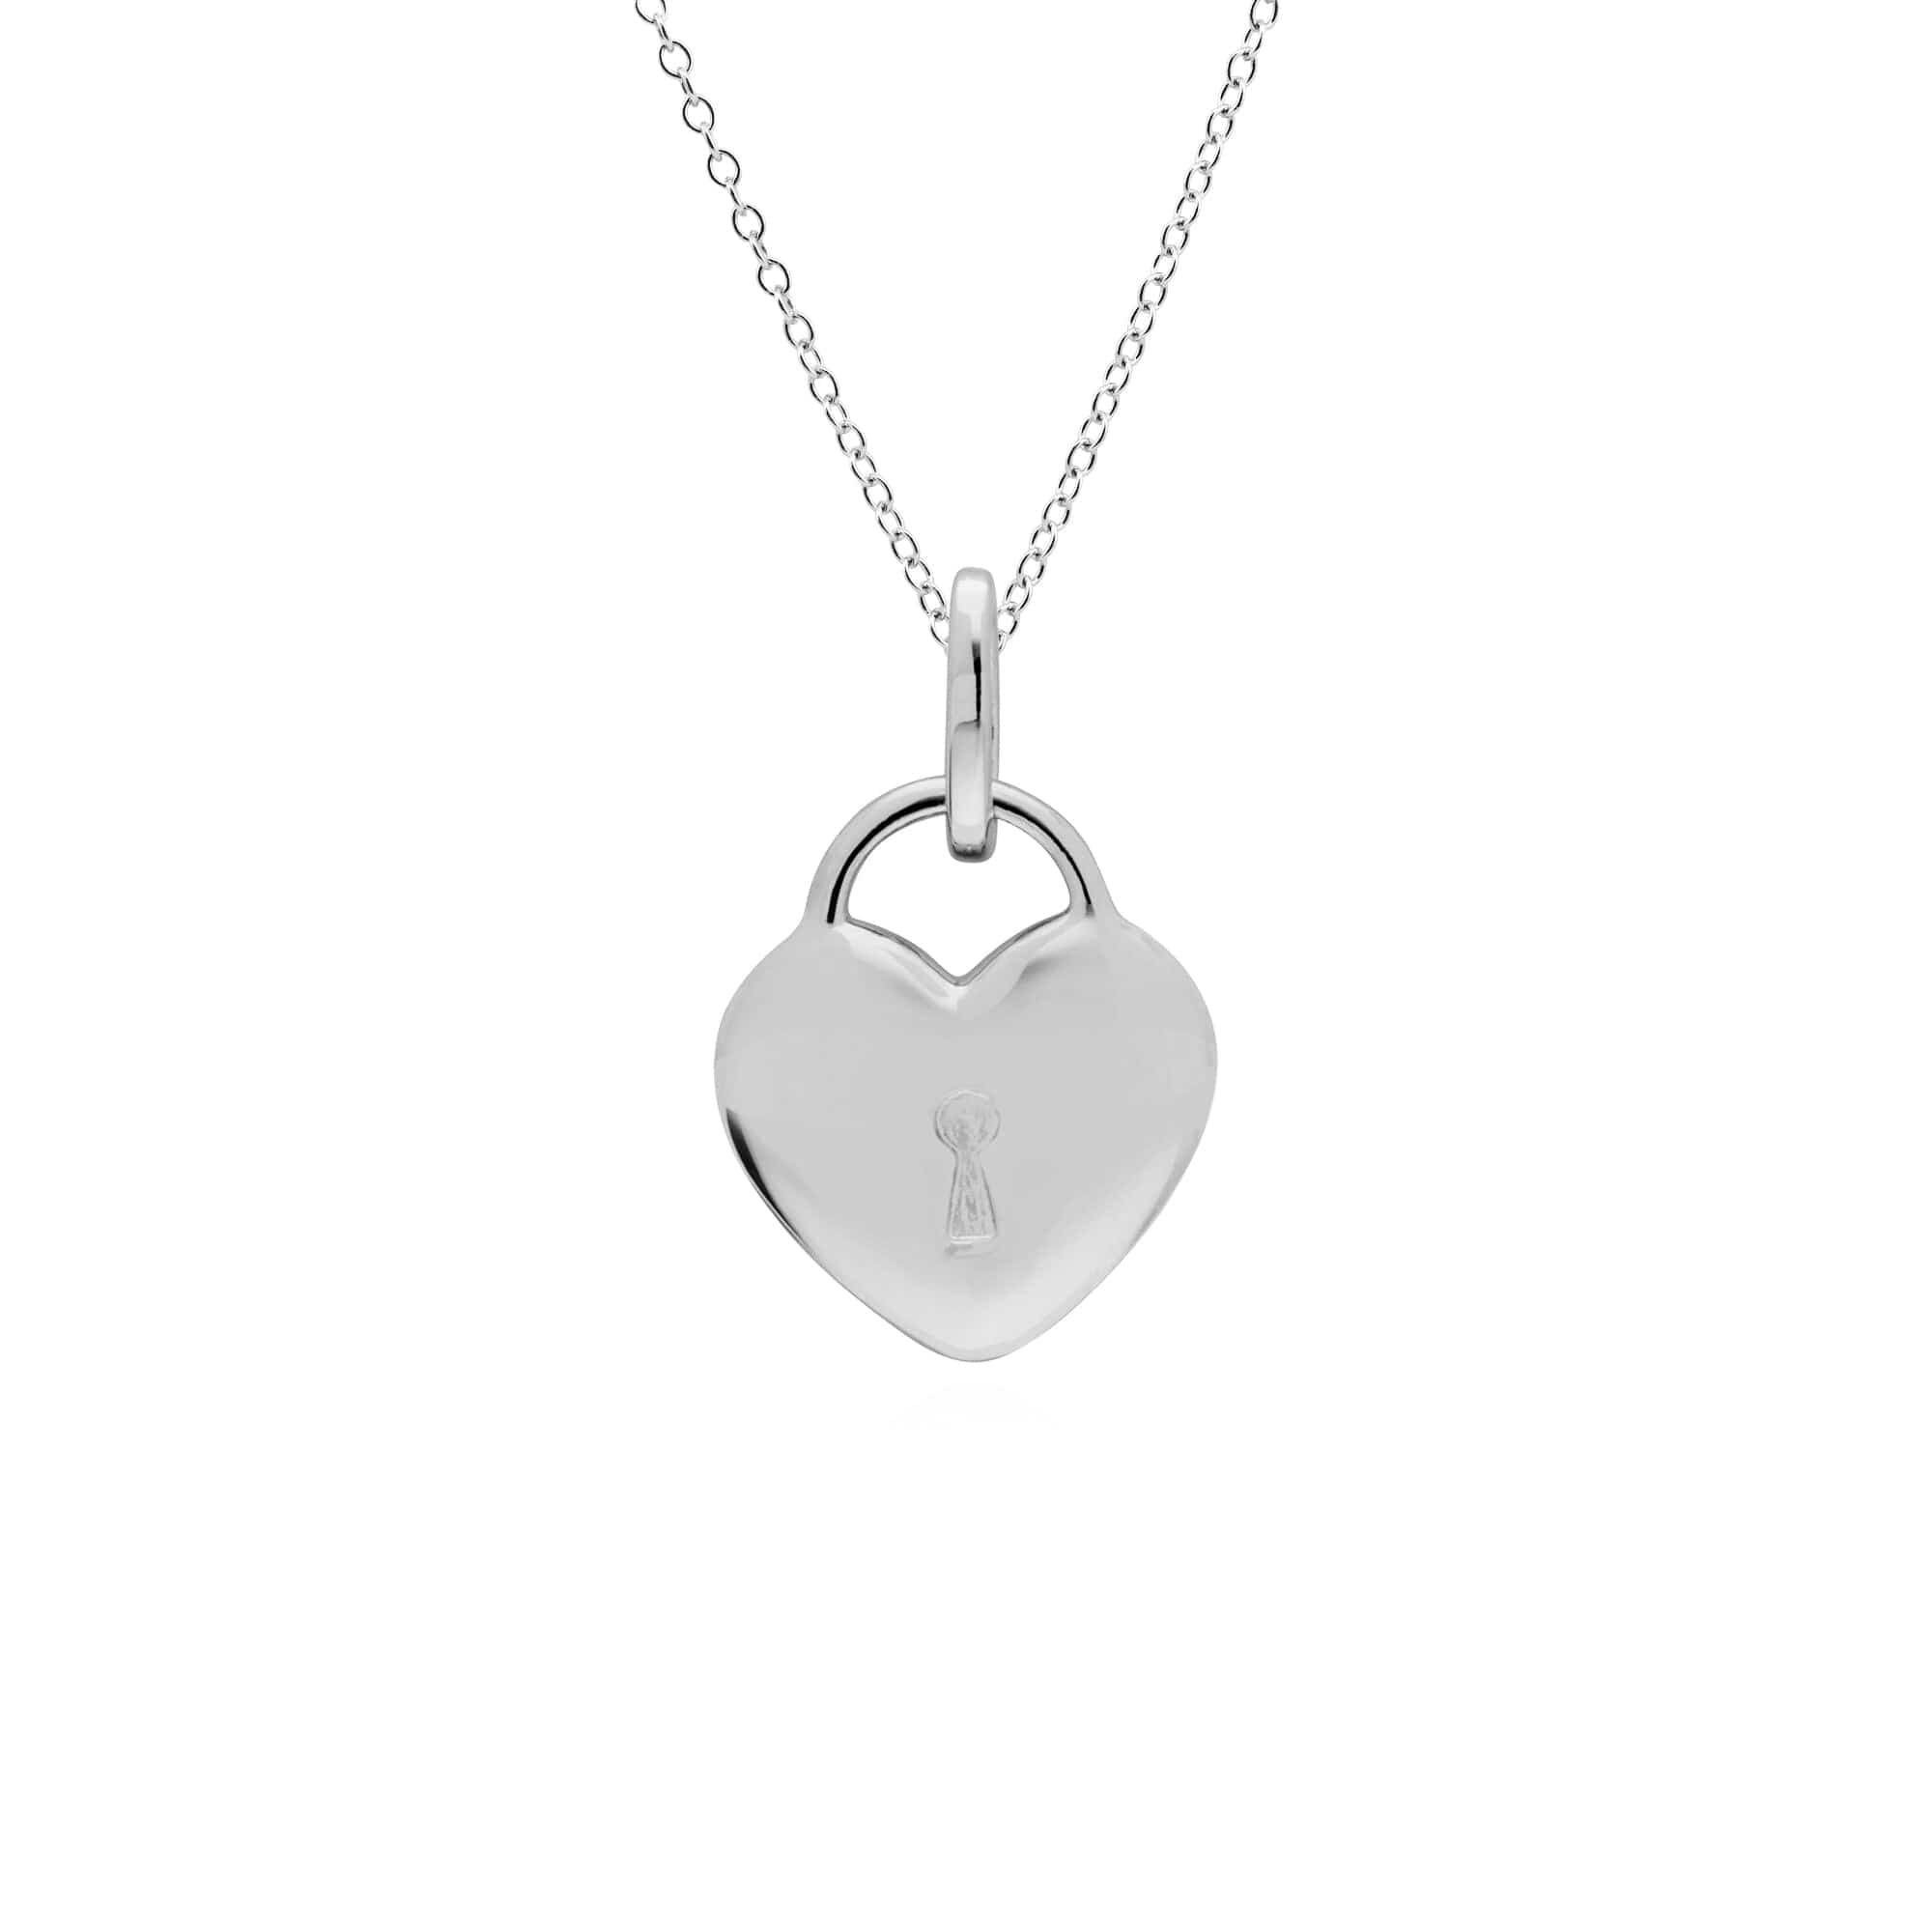 270P026807925-270P027001925 Classic Heart Lock Pendant & Emerald Big Key Charm in 925 Sterling Silver 3